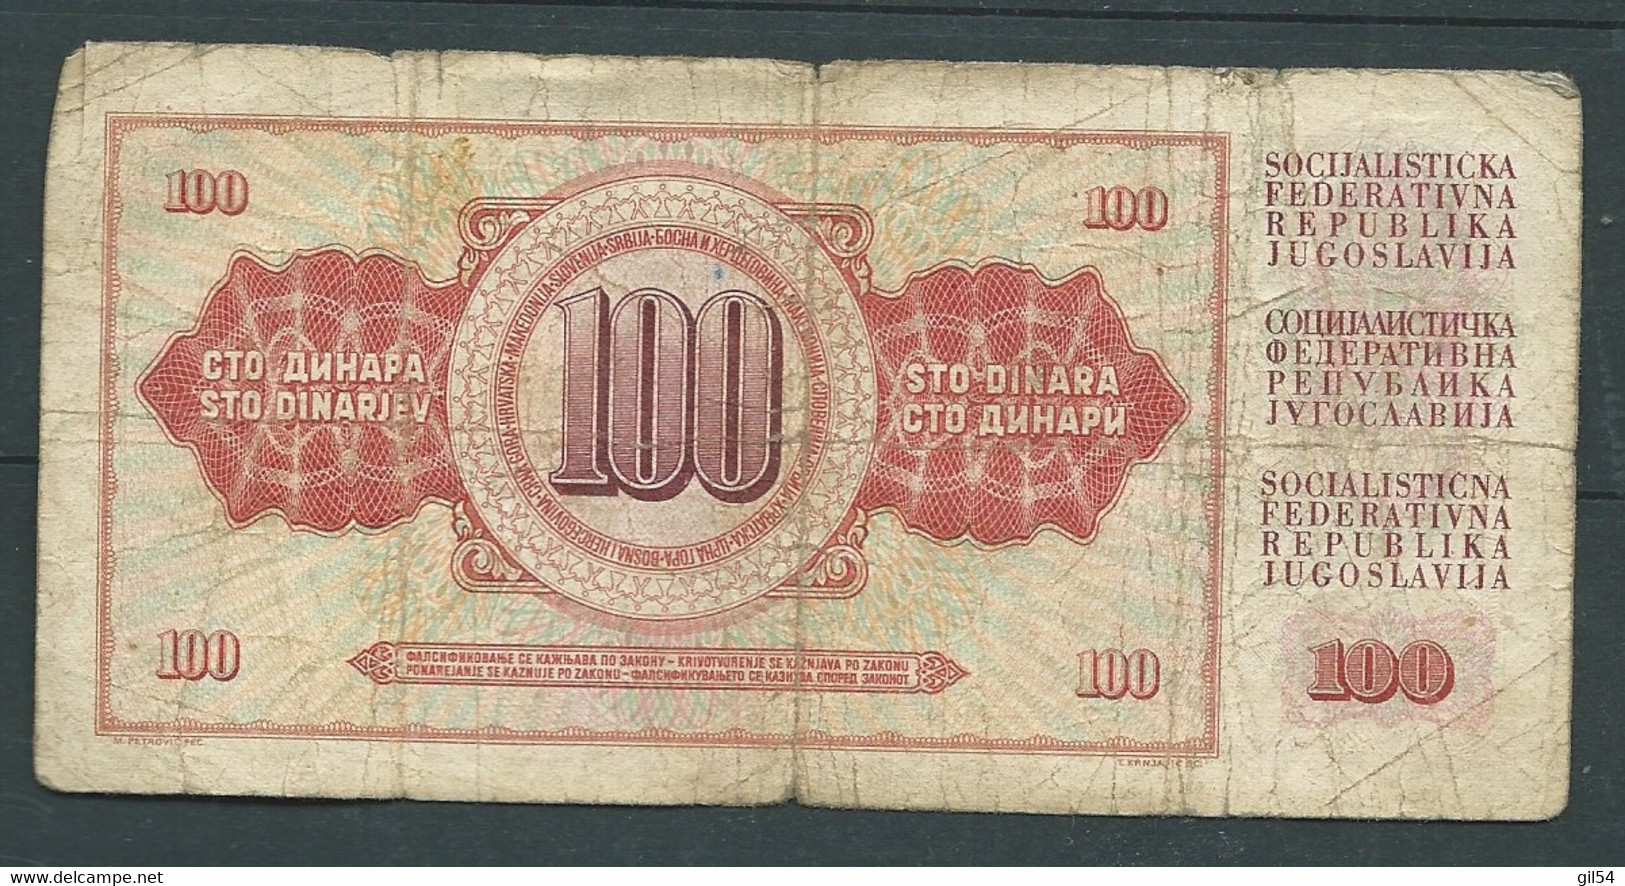 Billet Yougoslavie 100 Dinars Année 1965 EH640554 - ETAT D'USAGE   LAURA 9608 - Joegoslavië